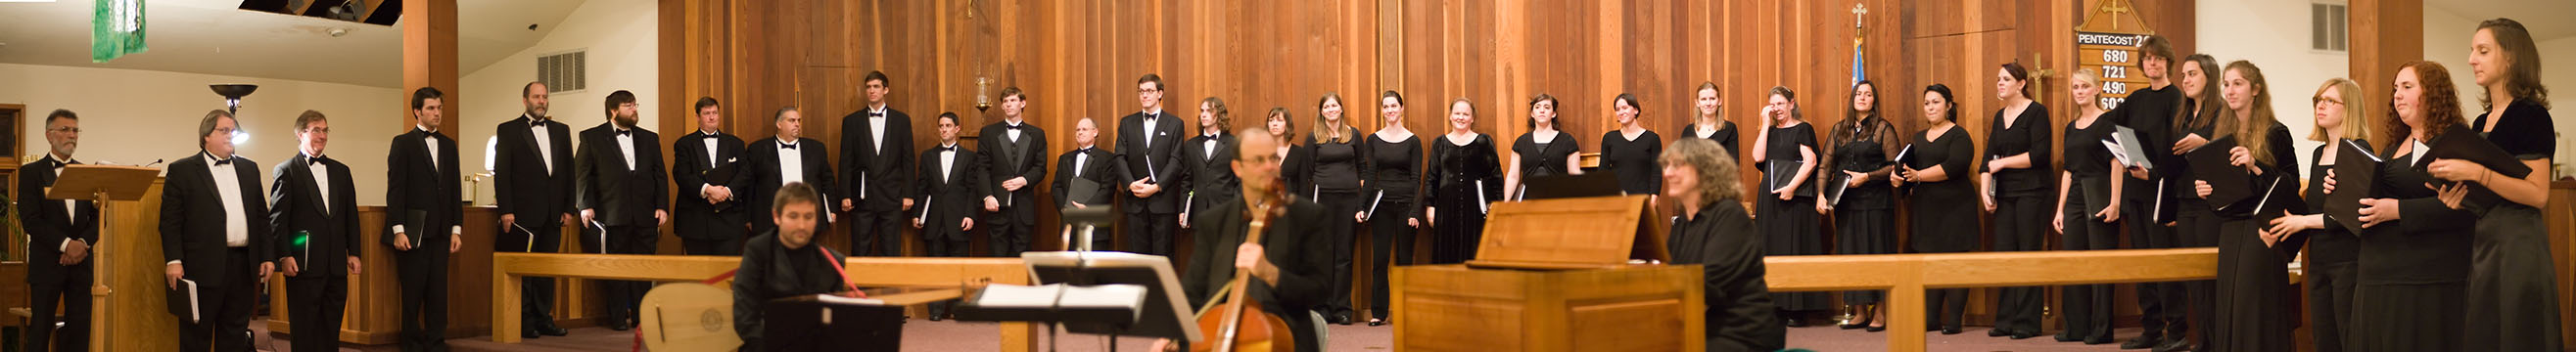 Sonoma State Chamber Choir